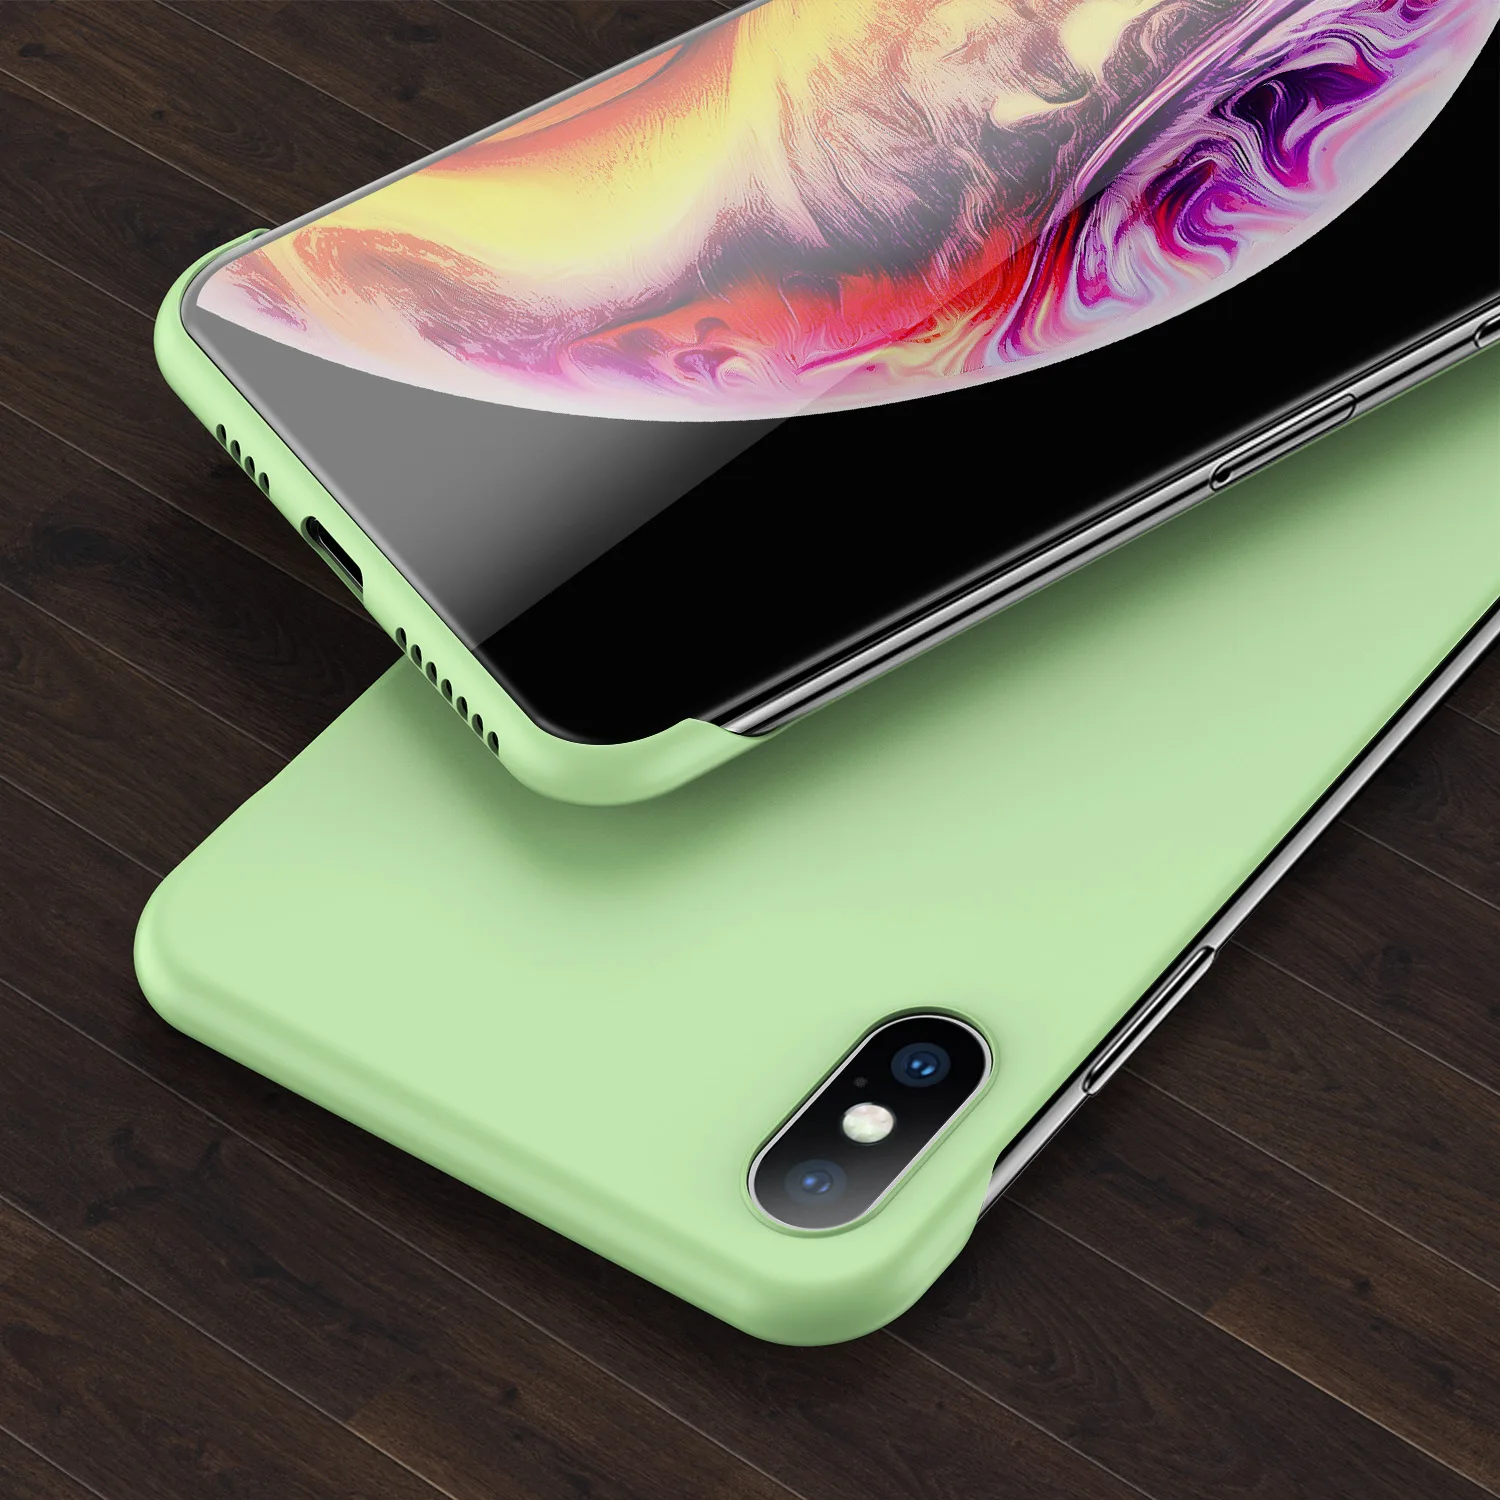 Lovebay чехол для телефона для iPhone 6, 6s, 7, 8 Plus, X, XR, XS Max, 11Pro, Max, яркие цвета, безрамный Жесткий ПК для iPhone 11, чехол-накладка - Цвет: green